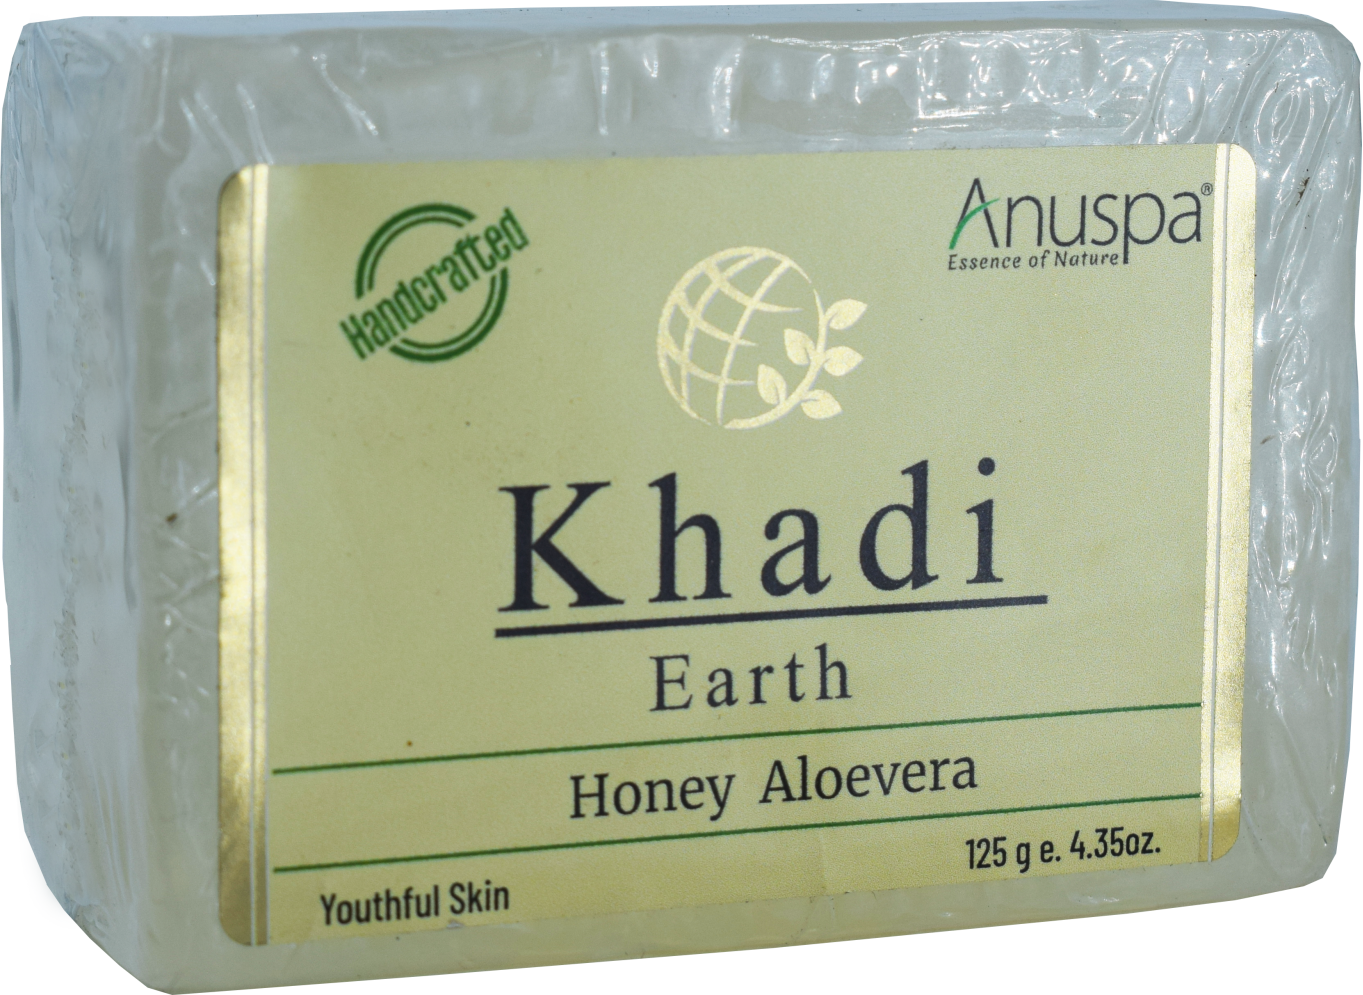 Anuspa Khadi Earth Handcrafted Herbal Honey Aloevera Bathing Bar for youthful skin,125gms